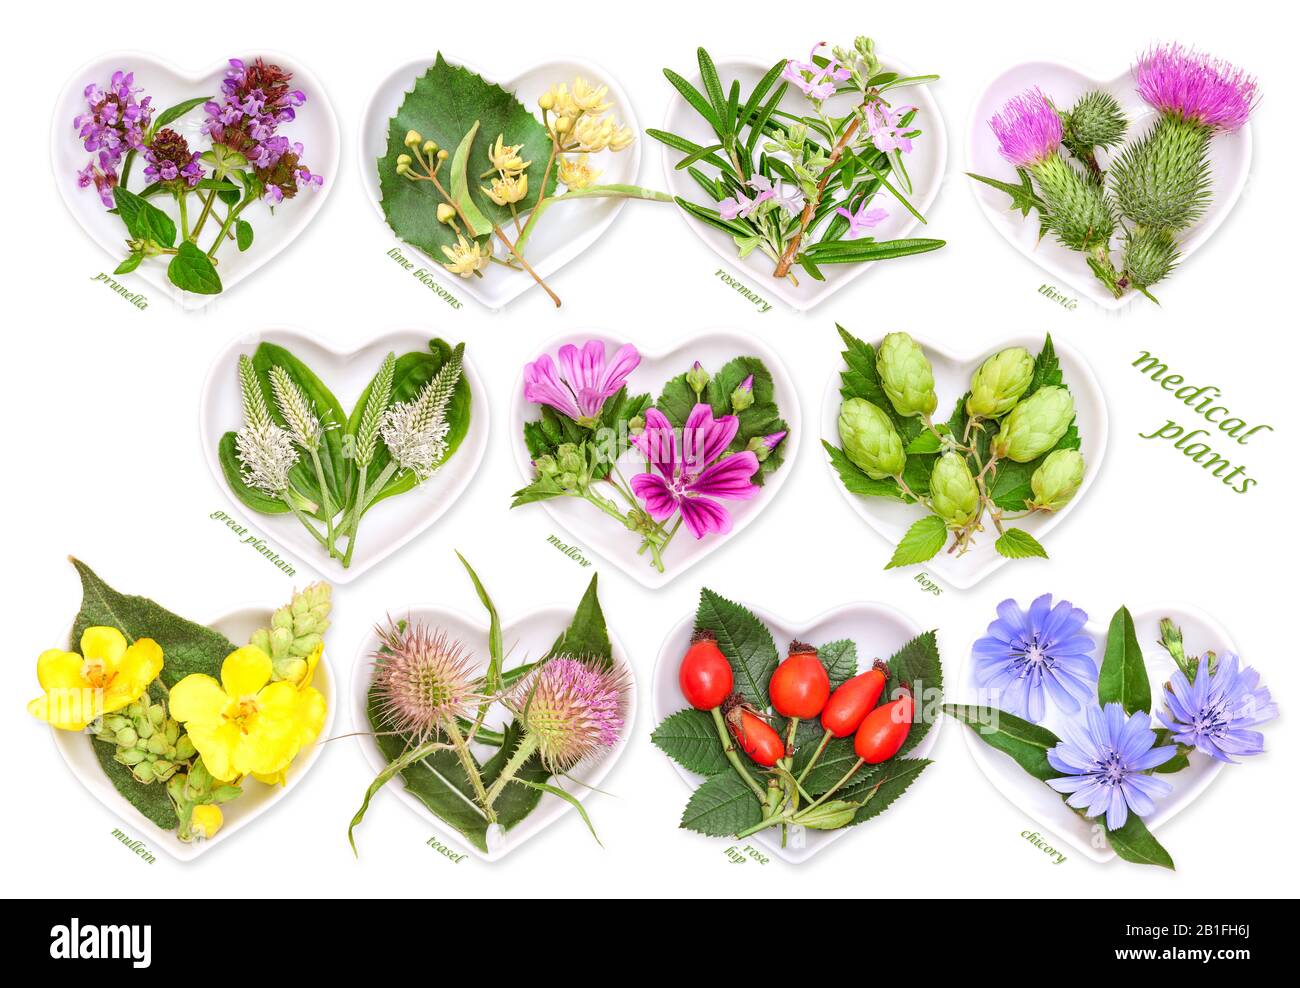 Alternative Medicine with medicinal plants 3 Stock Photo